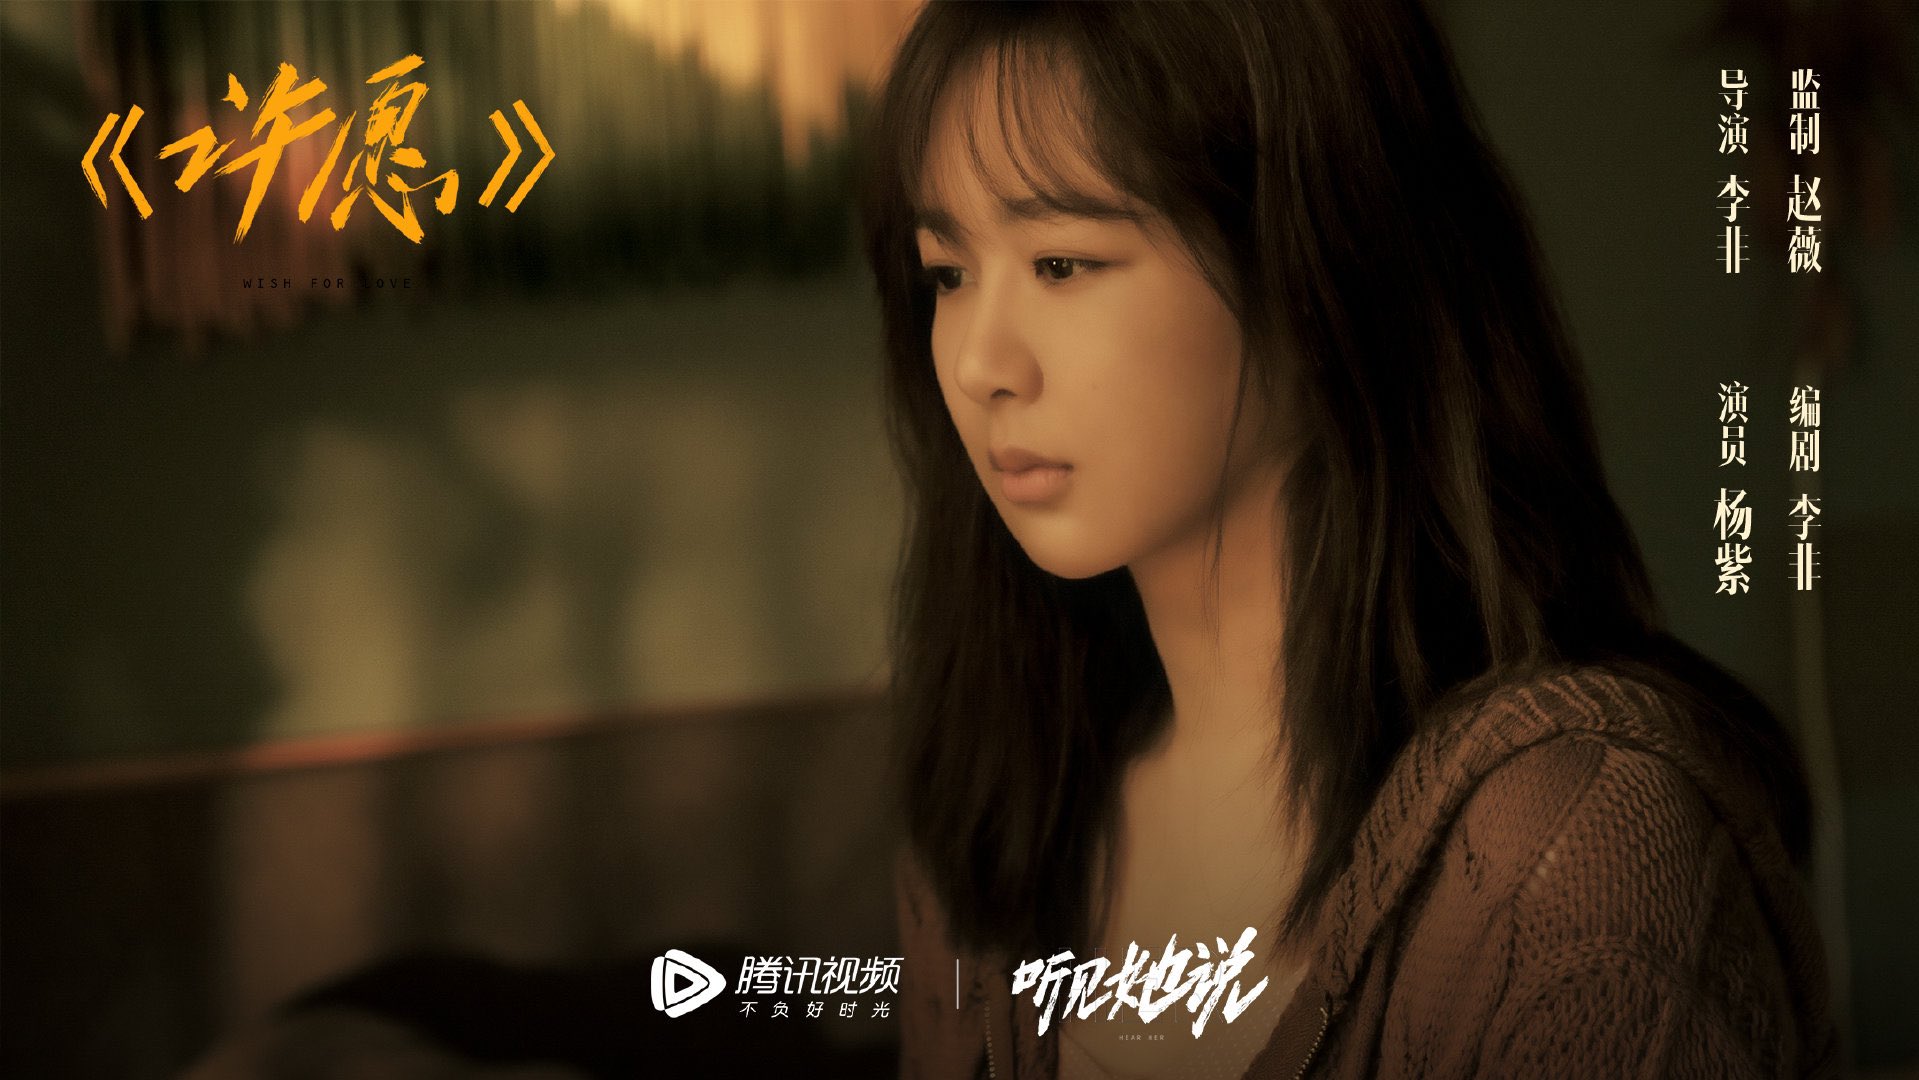 cdrama tweets on X: Female-centric drama #LoveIsTrue starting Liu